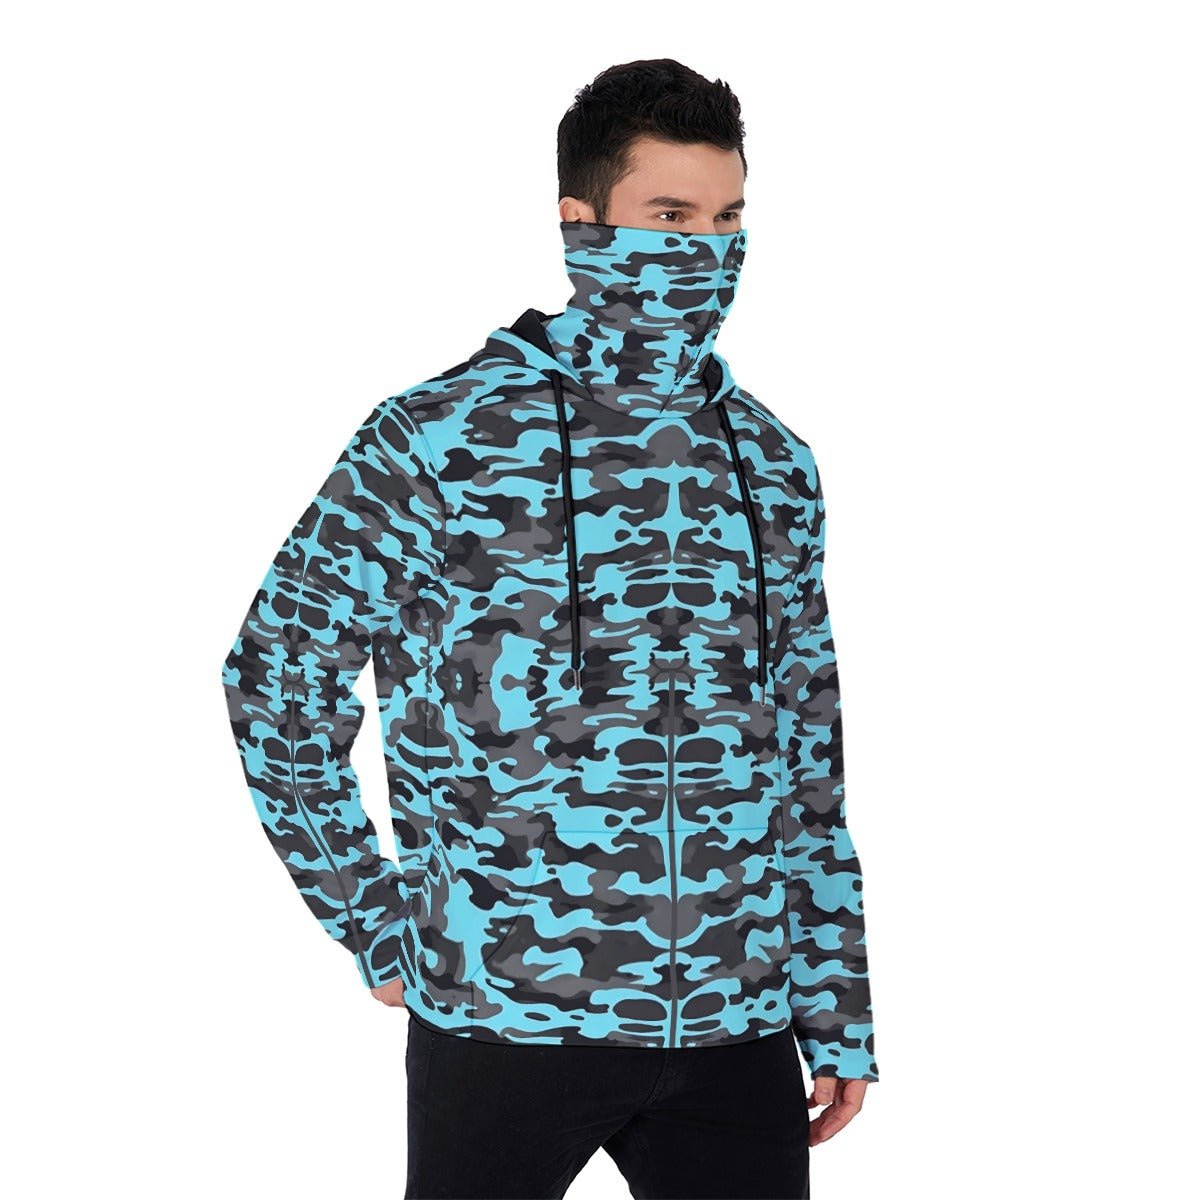 Anti-facial recognition Print Men's Fleece Hoodie With Mask - Nikikw Designs